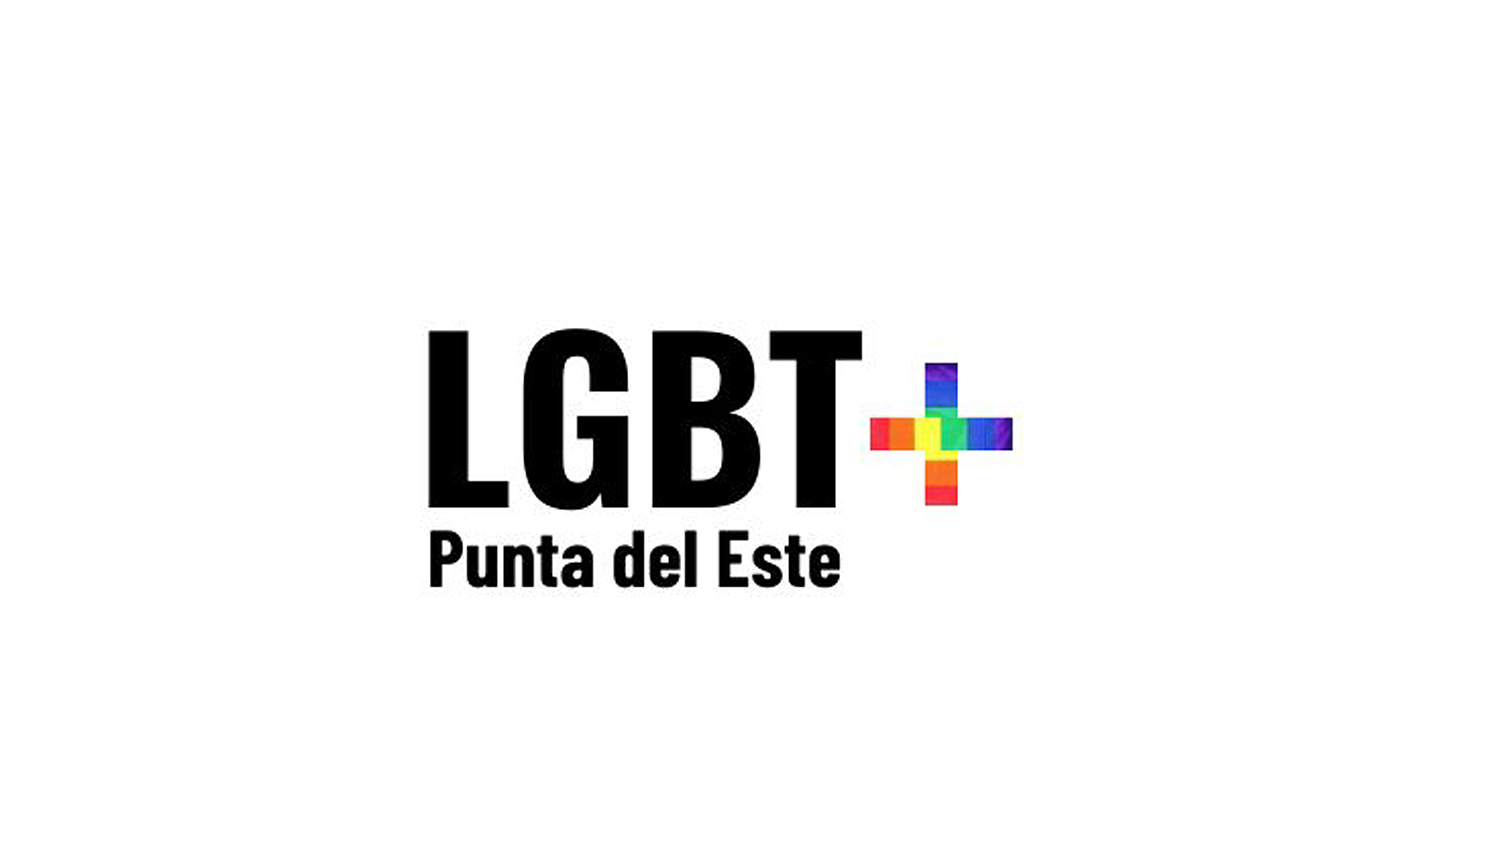 https://gnetwork360.com/2022/buenosaires/wp-content/uploads/2022/10/SPONSORS-G360-BUE-2022-PUNTA-DEL-ESTE-LGBT.jpg